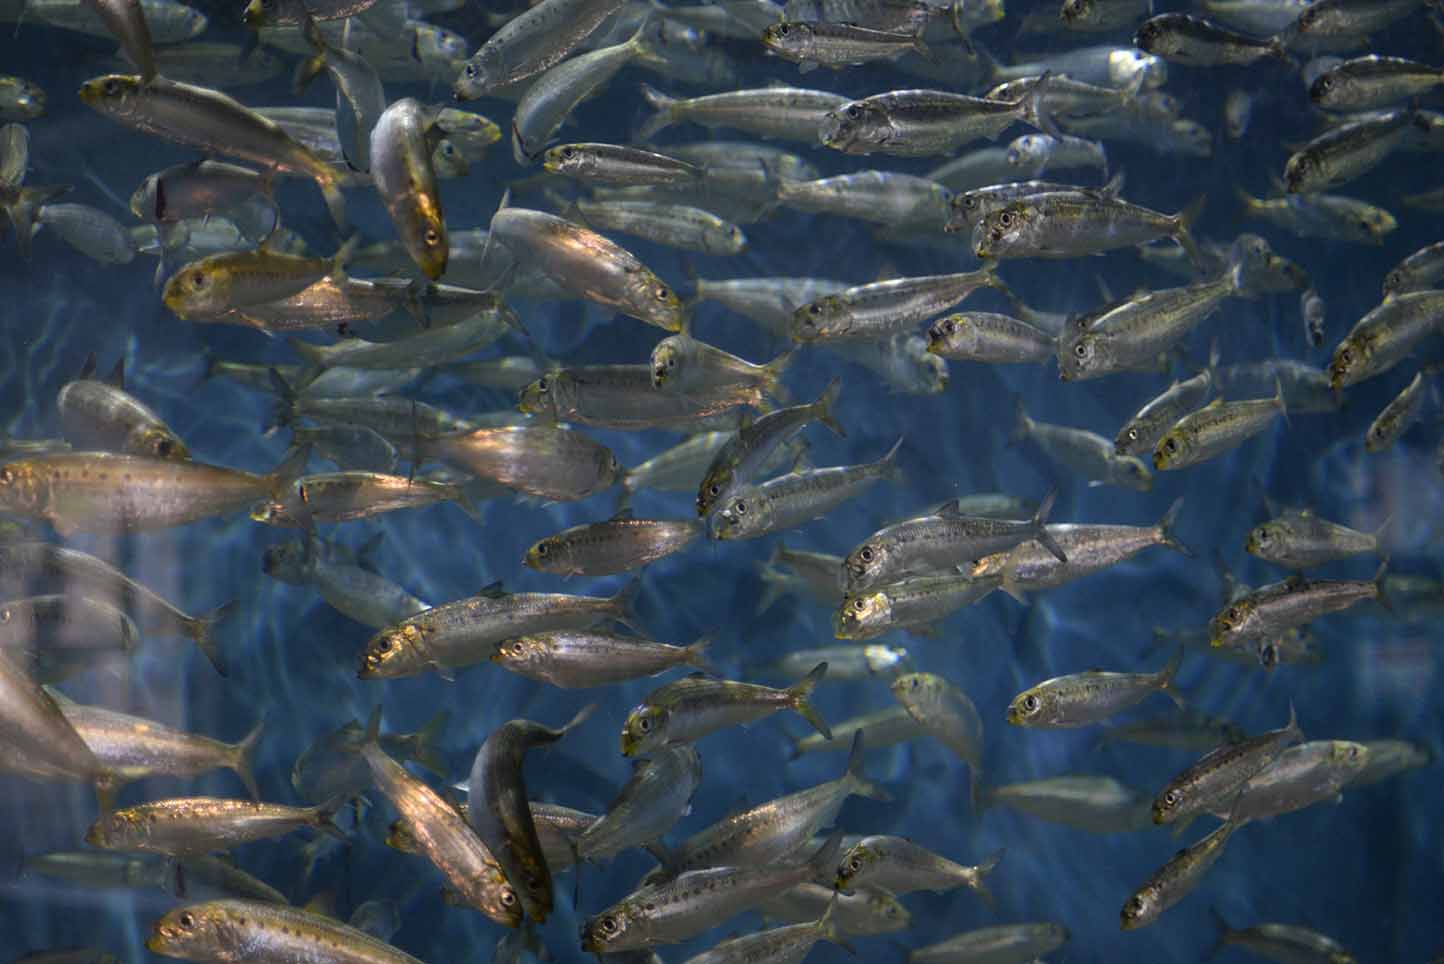 Densely crowded school of fish in aquarium.